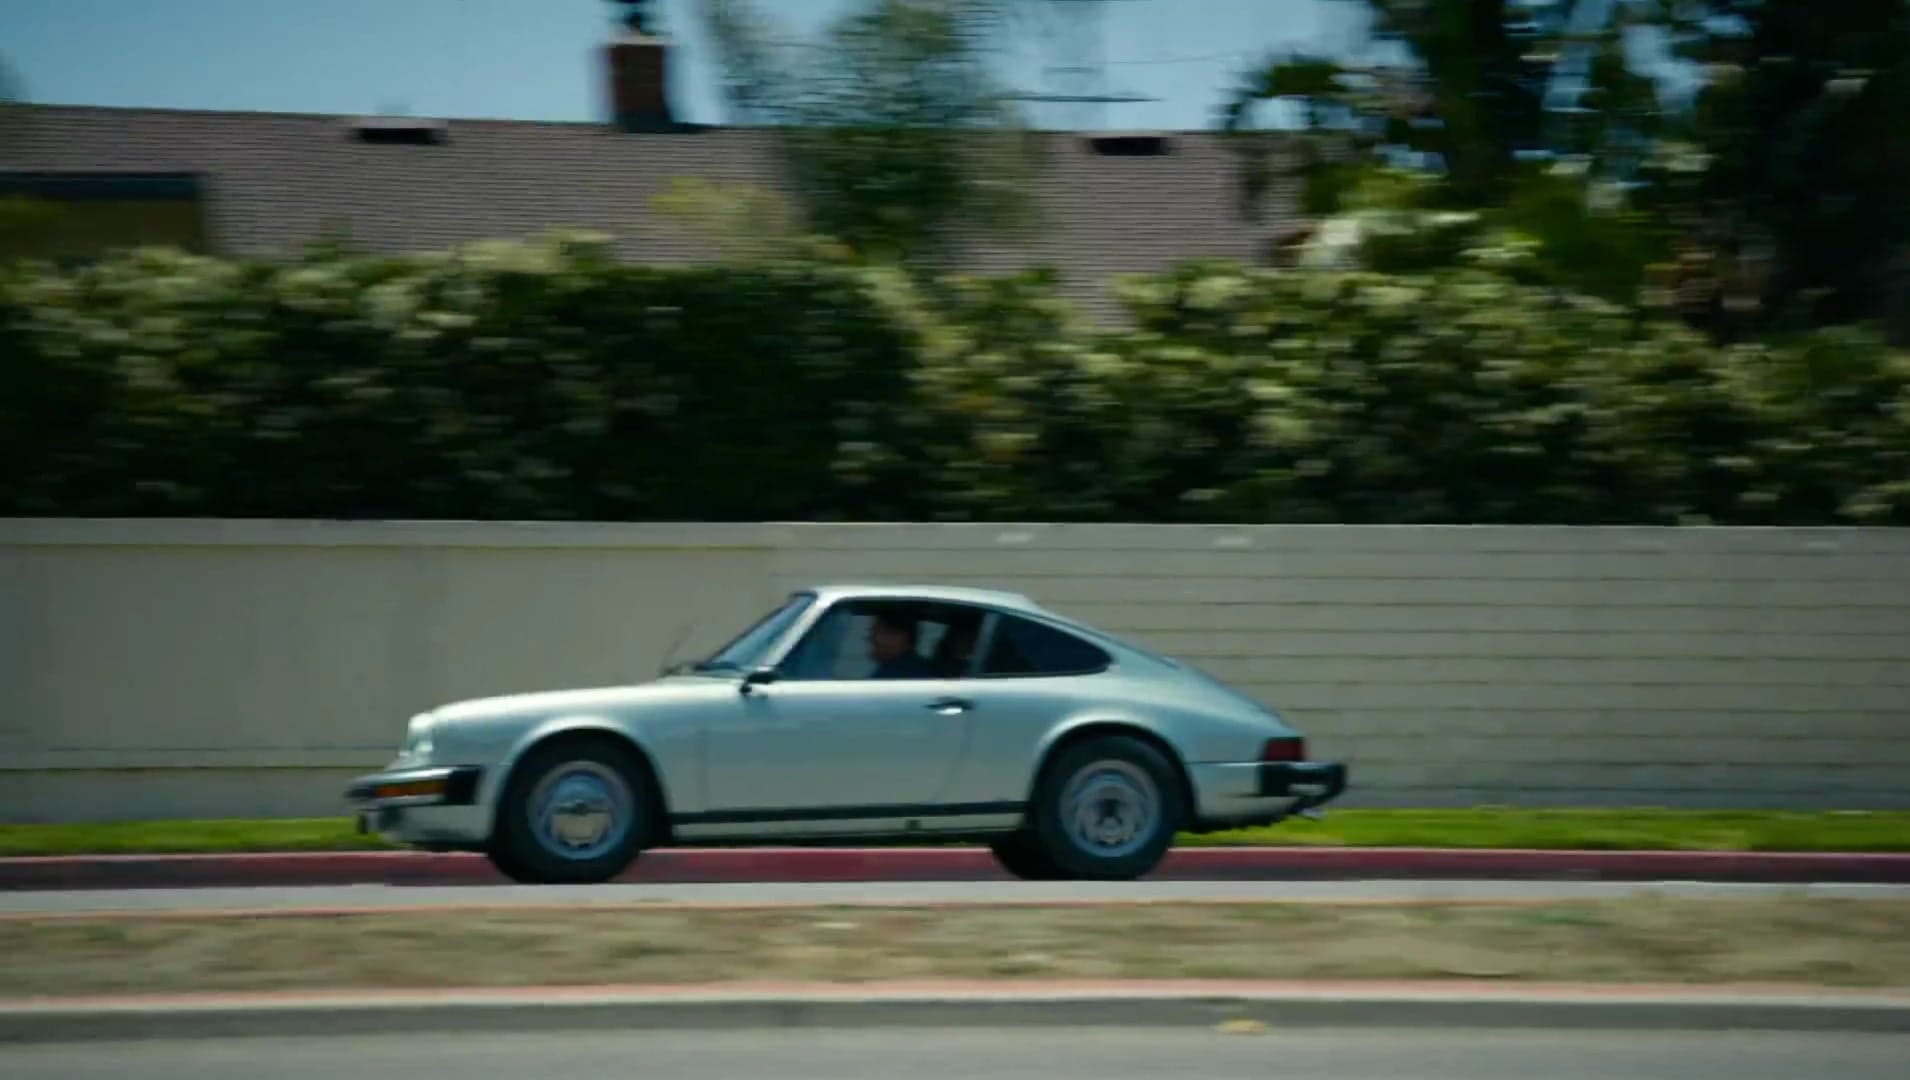 Catch A 1976 Porsche 912E On Velocity Channel’s Classic Car Refurb Show “Wheeler Dealers”